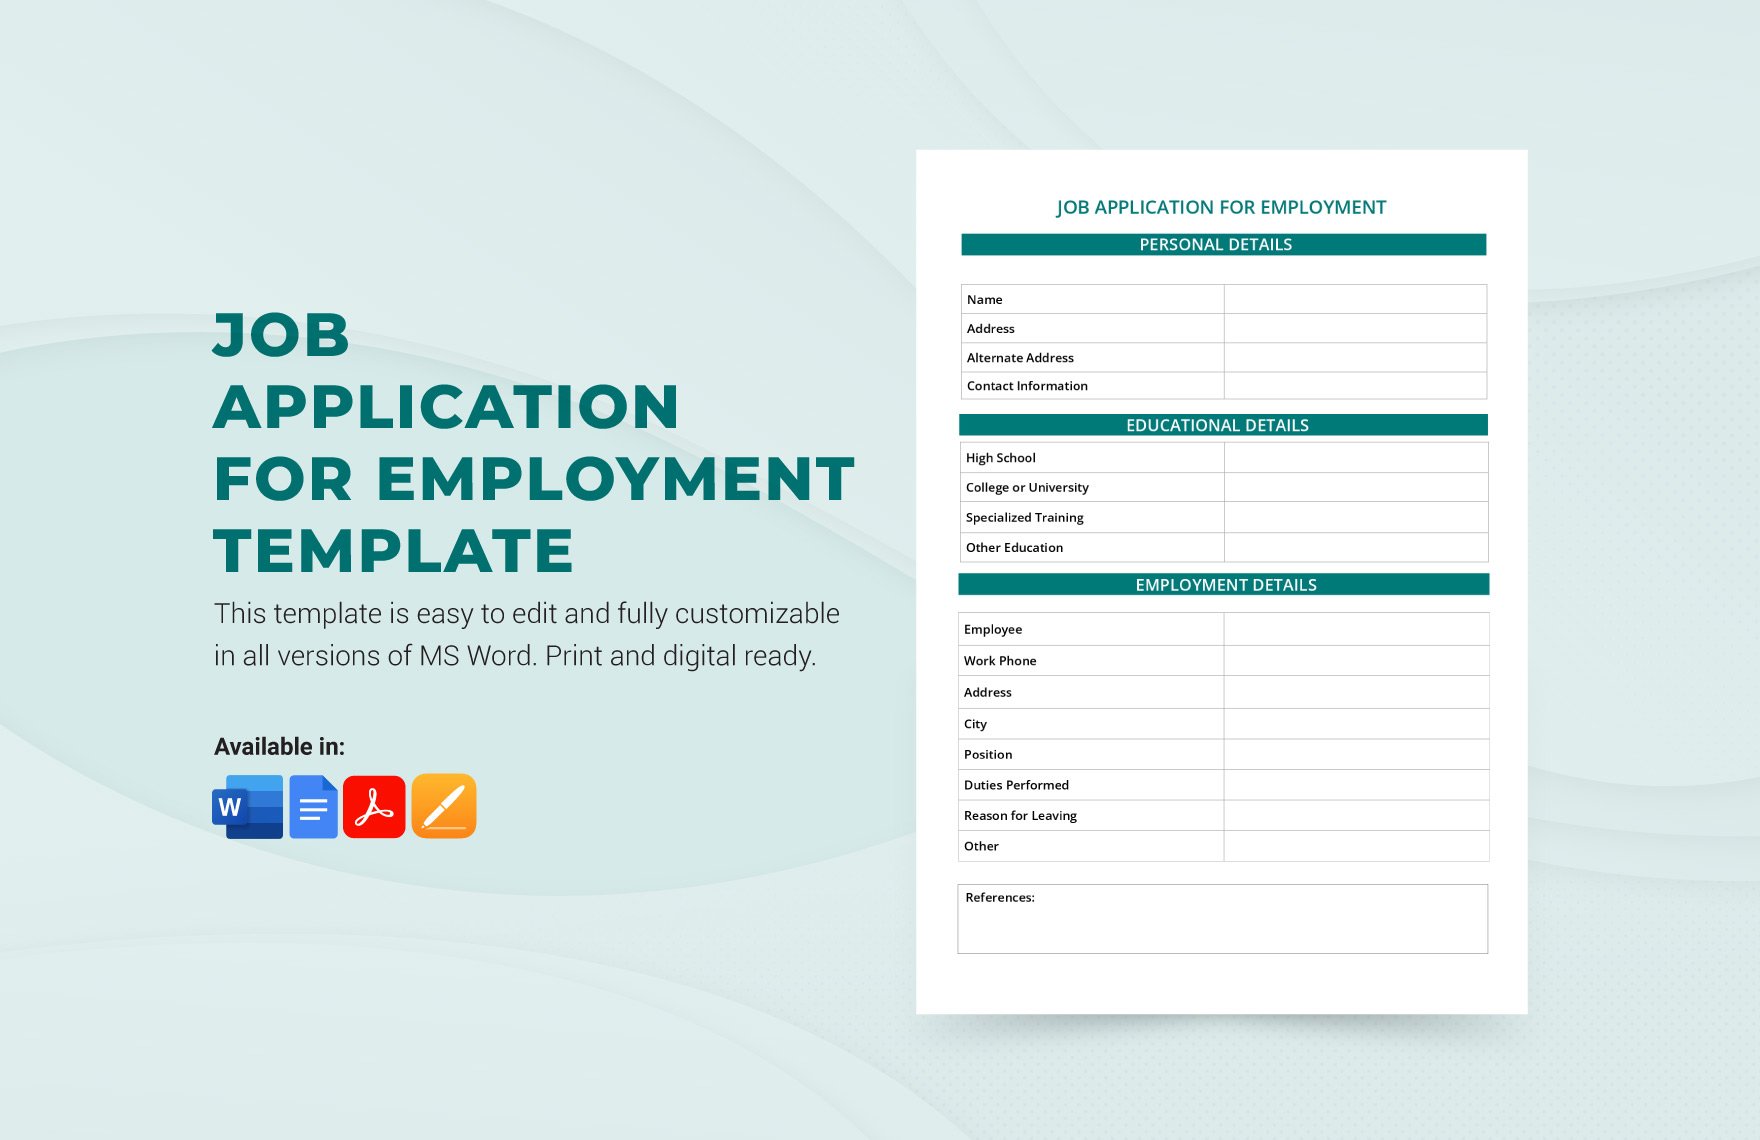 Job Application for Employment Template